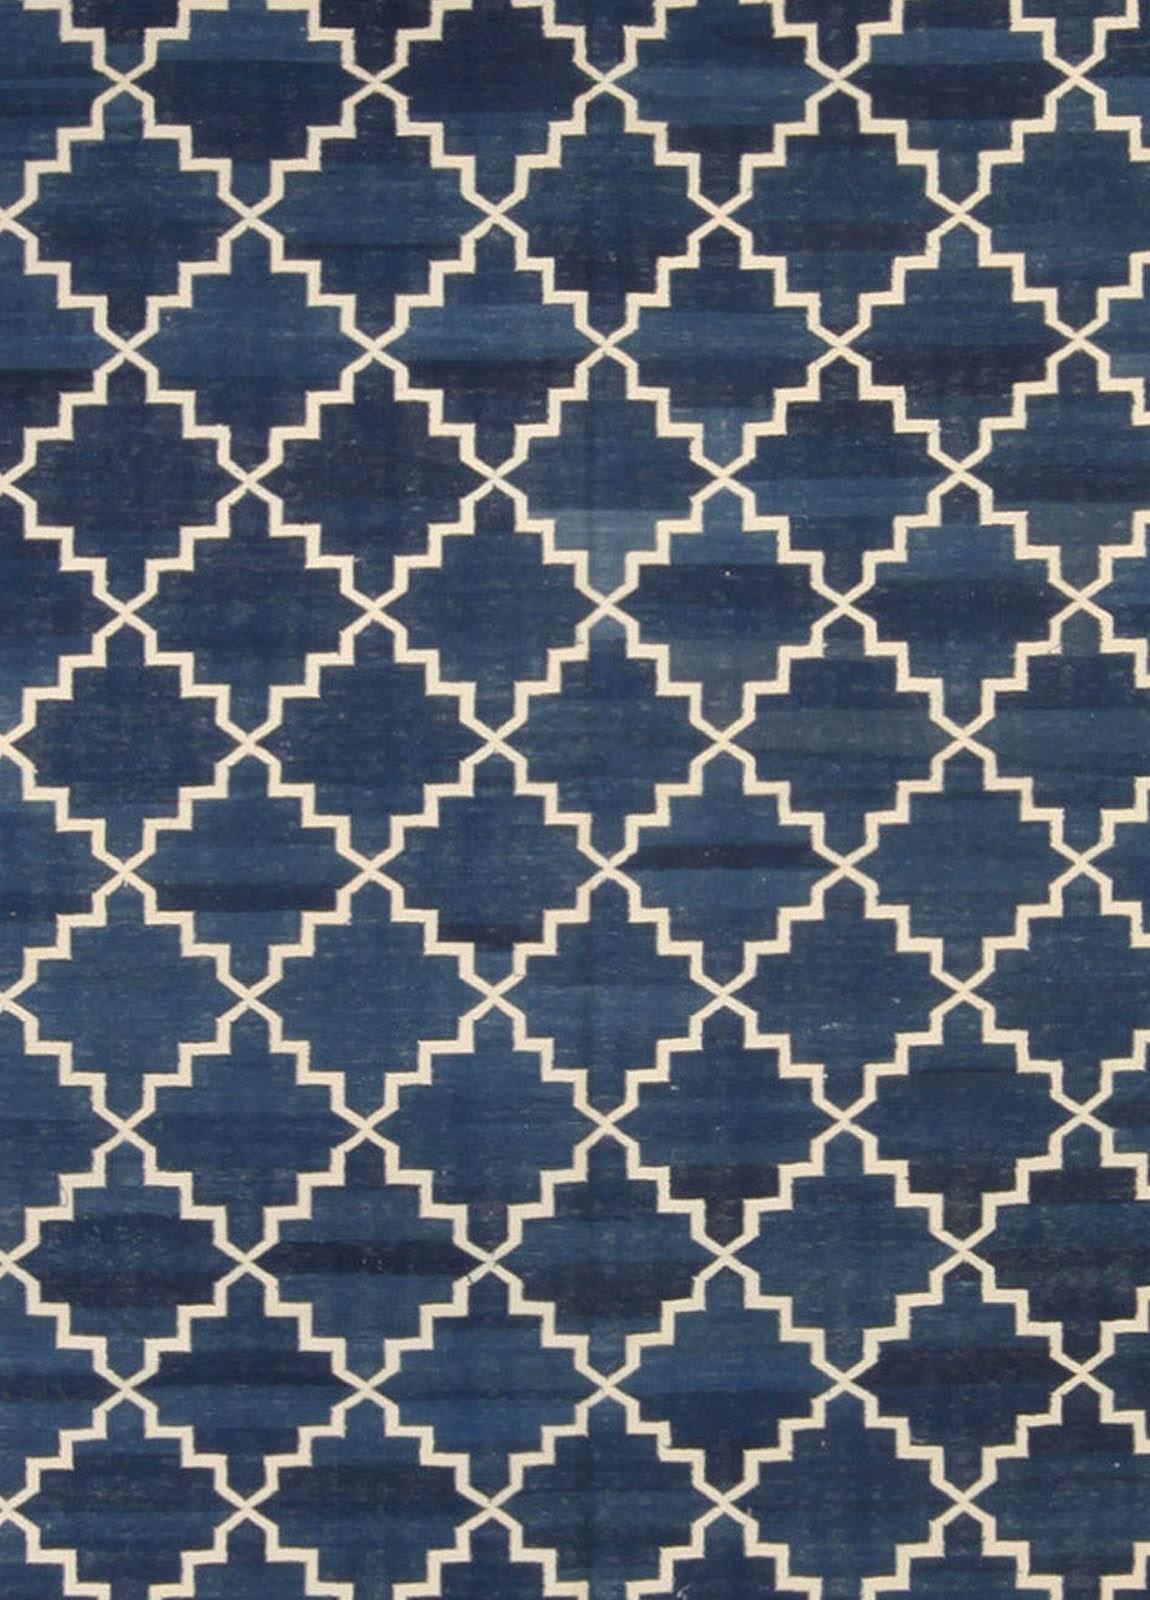 Modern Indian Dhurrie blue, white handmade cotton rug by Doris Leslie Blau
Size: 11.10